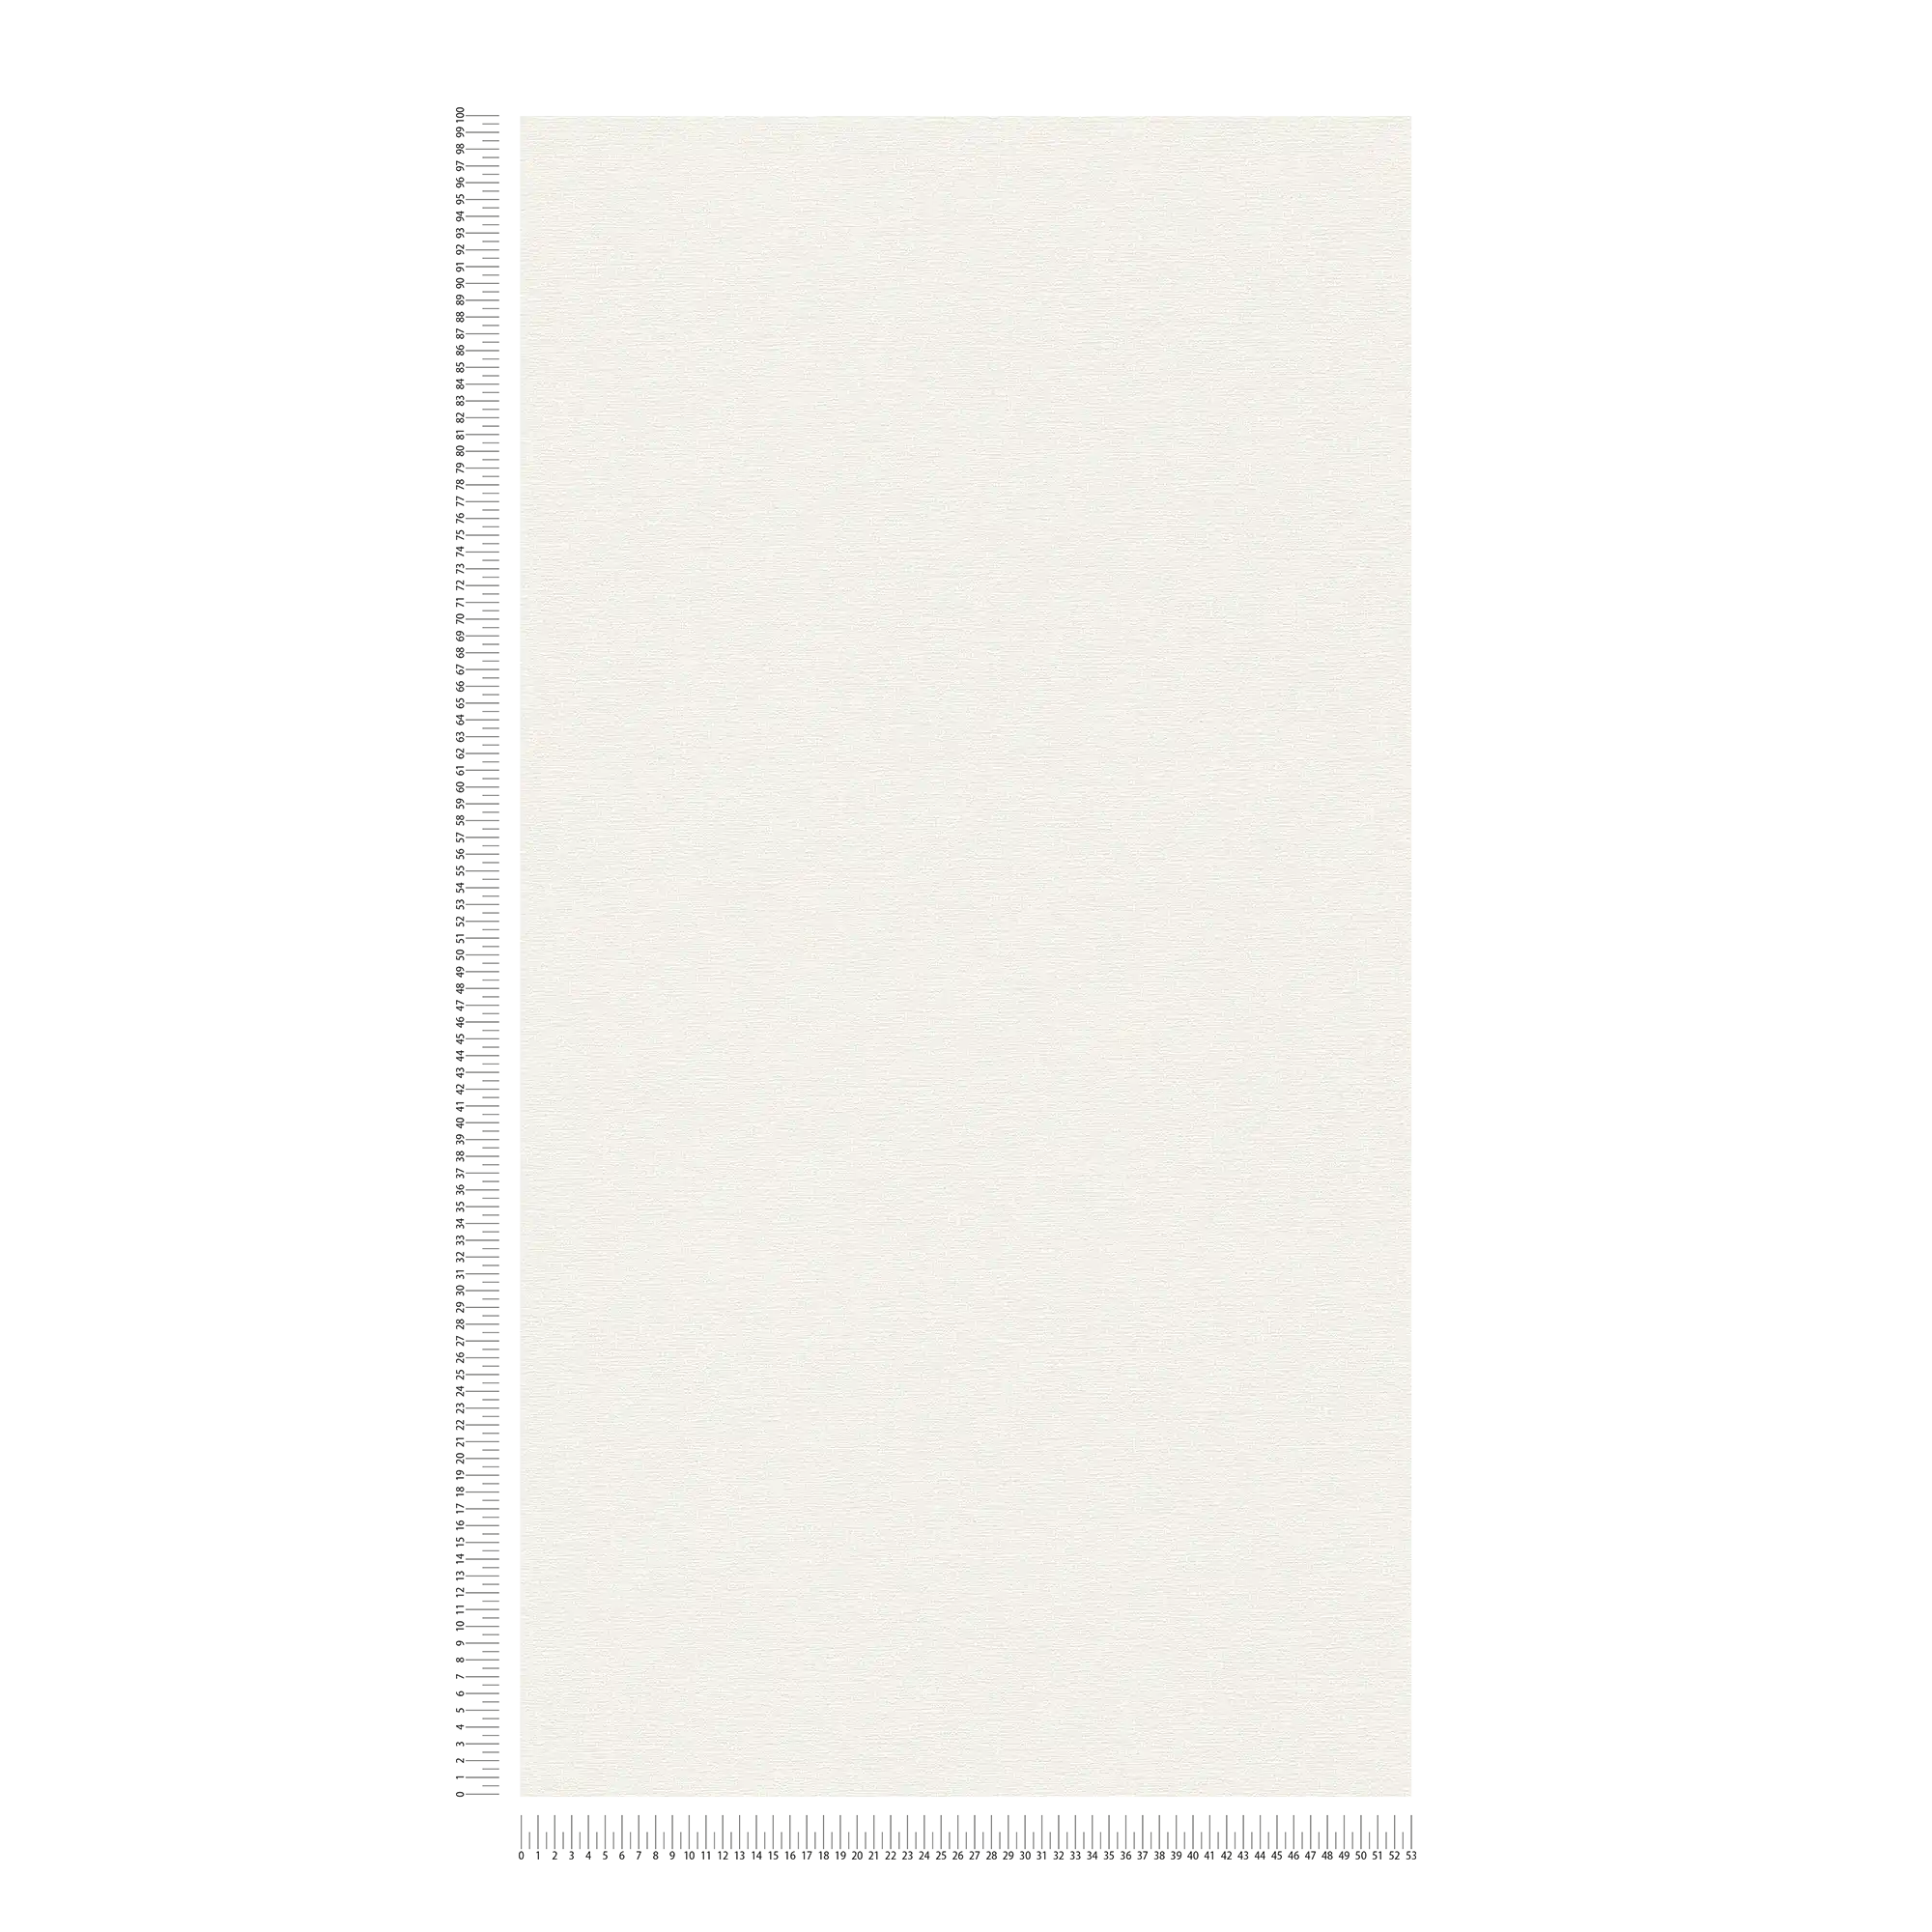             Lightly textured non-woven wallpaper, single-coloured - white
        